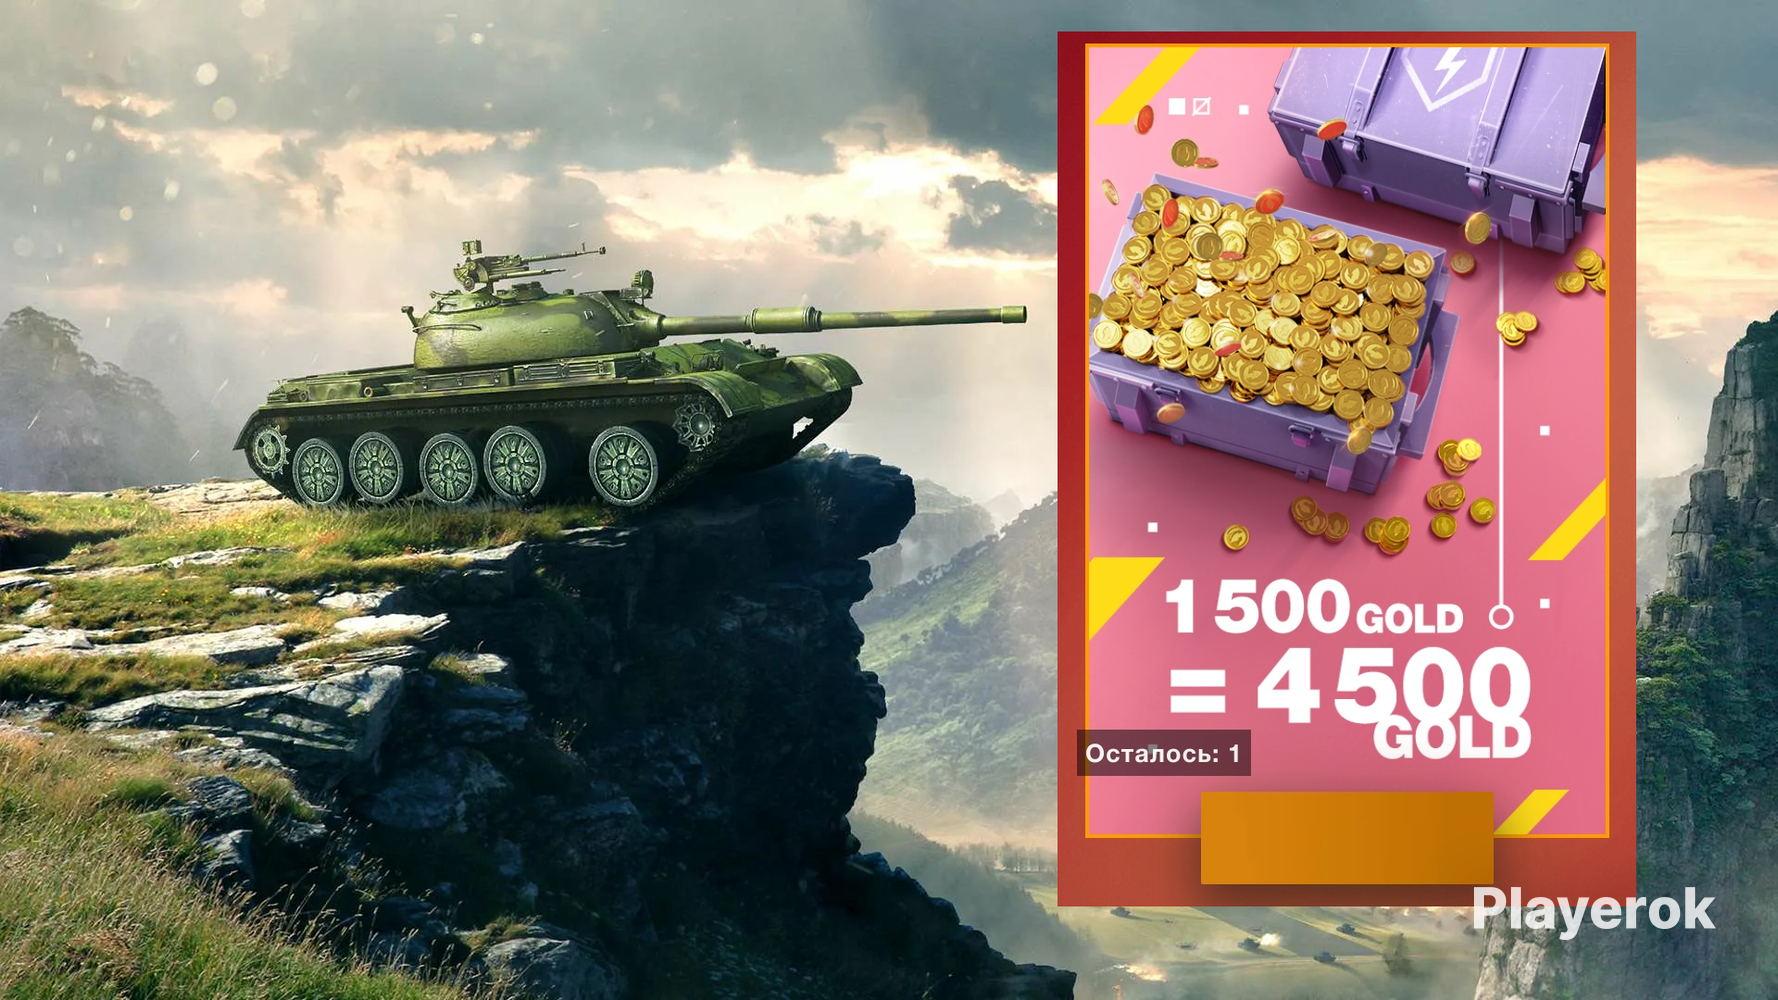 Купить ЕВРО!!!⚡⚡🔥4500 ЗОЛОТА- 1 РАЗ НА АККАУНТ🔥⚡⚡ЕВРО!!! World of Tanks  Blitz за 699 ₽ - Золото World of Tanks Blitz